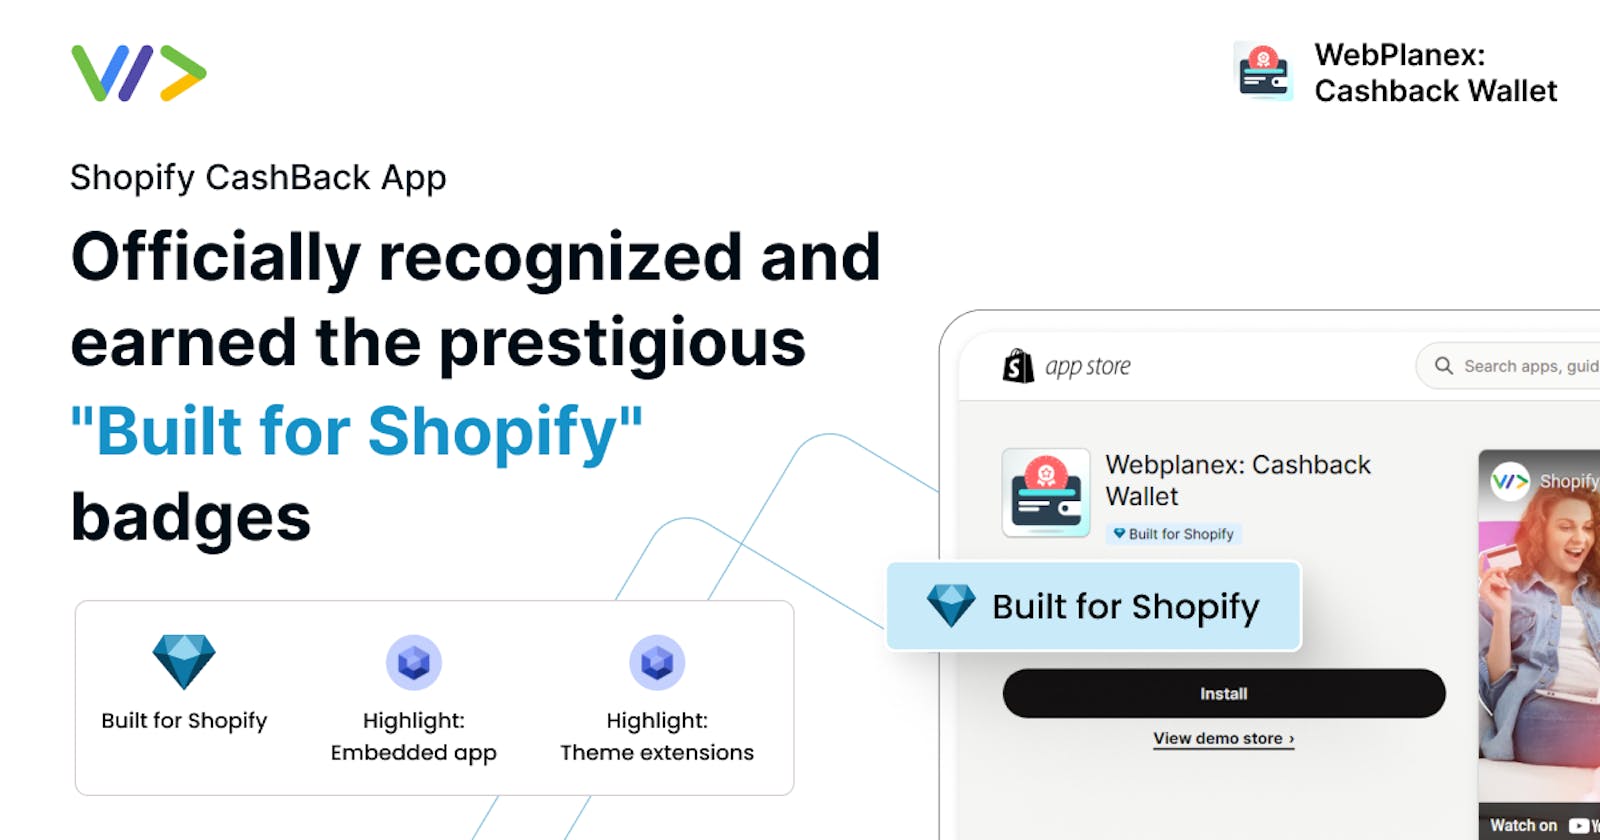 Our Cashback Wallet App Earned the Prestigious “Built for Shopify” Badge!